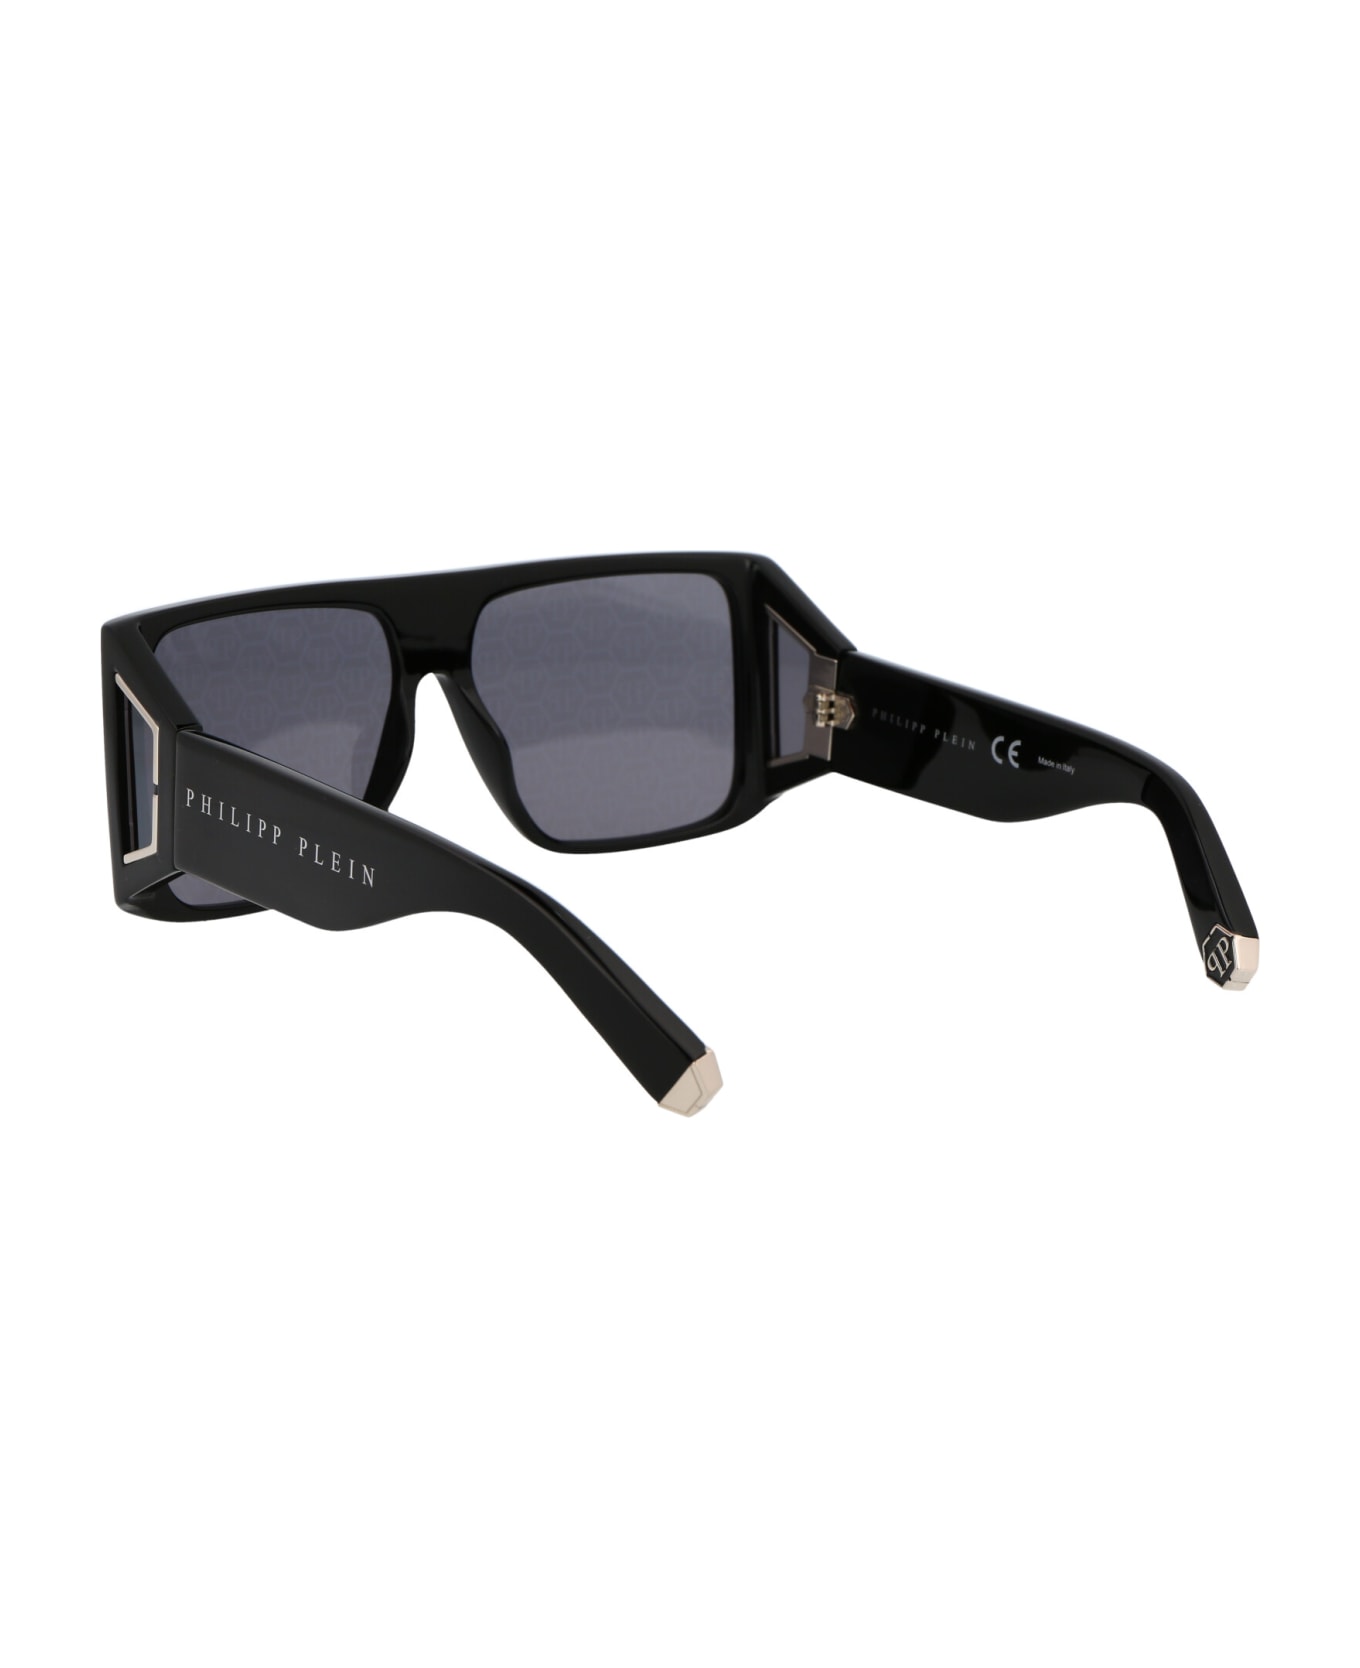 Philipp Plein Plein Revolution Paris Sunglasses - 700L BLACK